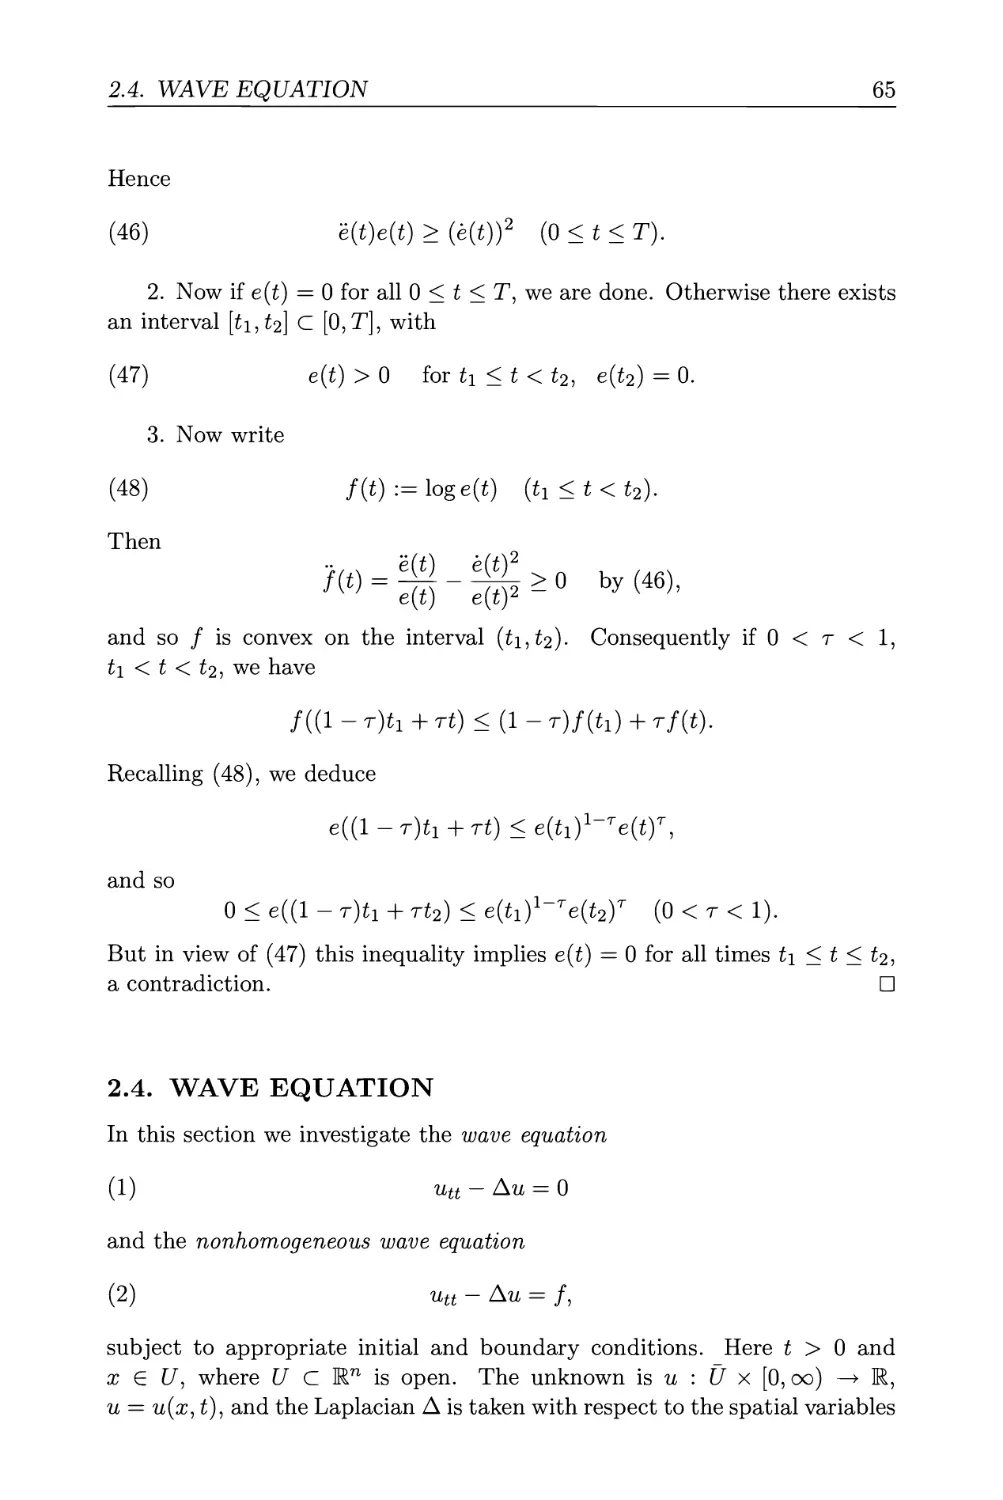 2.4. Wave equation